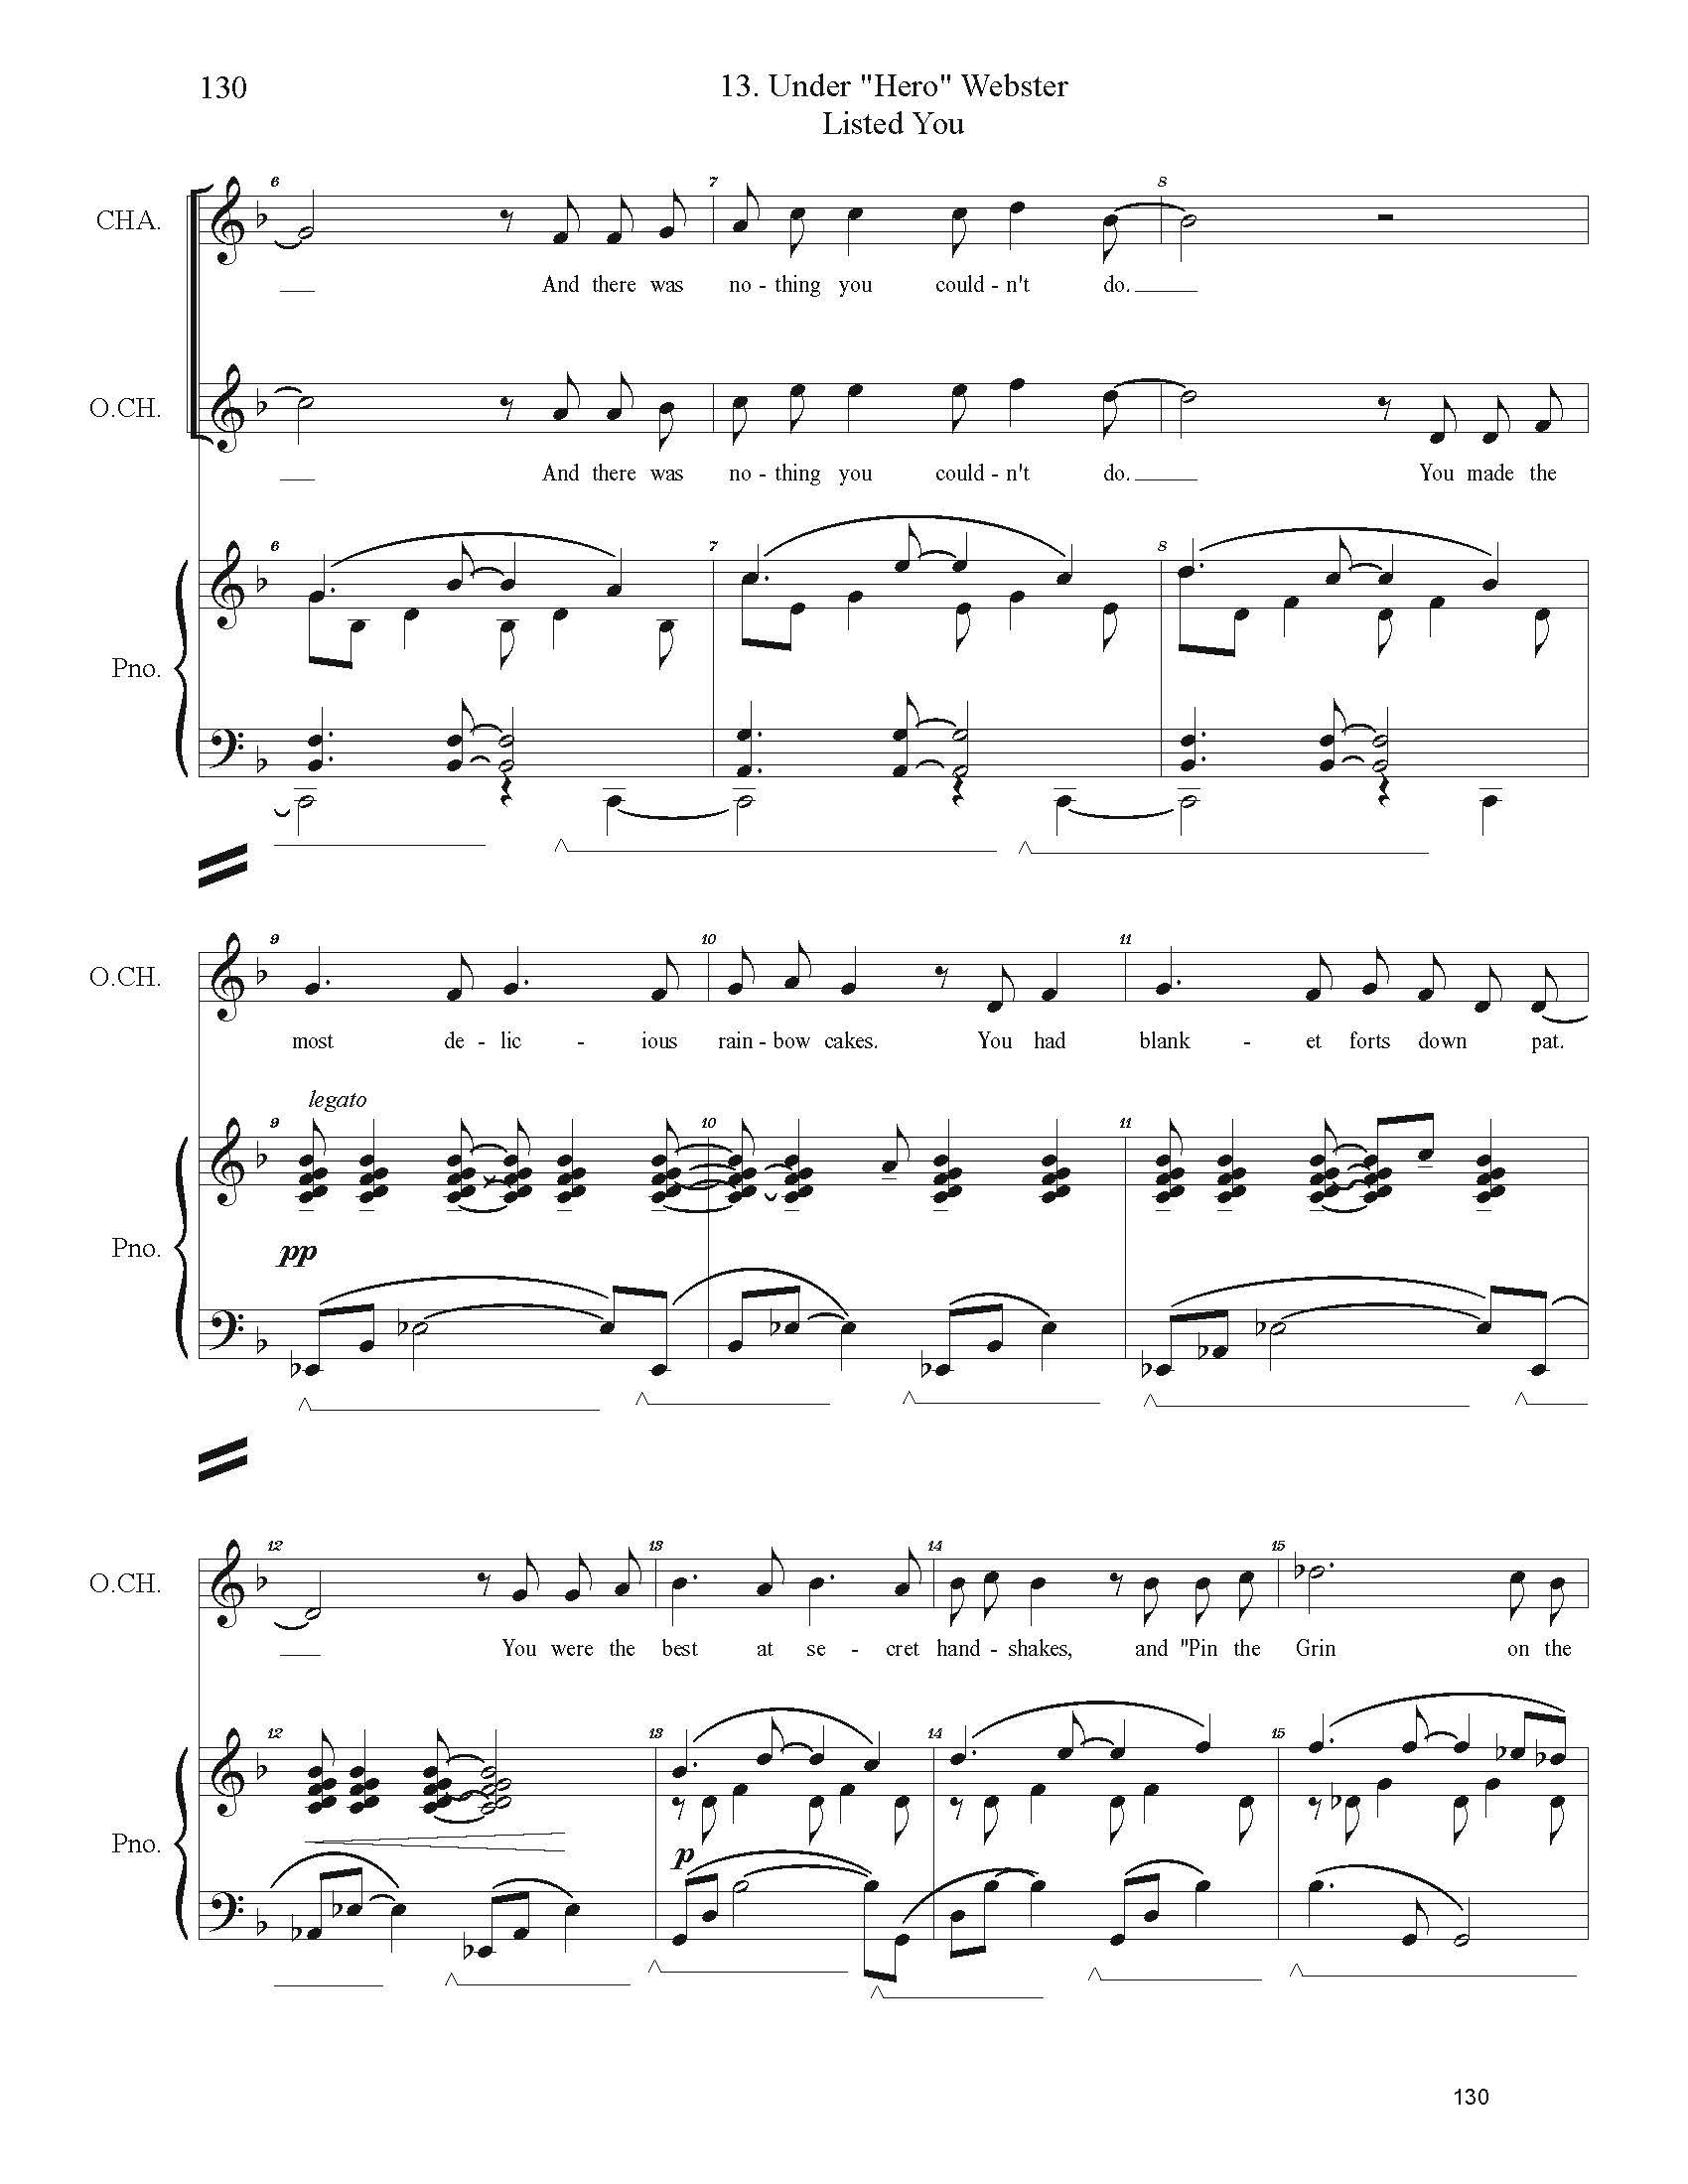 FULL PIANO VOCAL SCORE DRAFT 1 - Score_Page_130.jpg